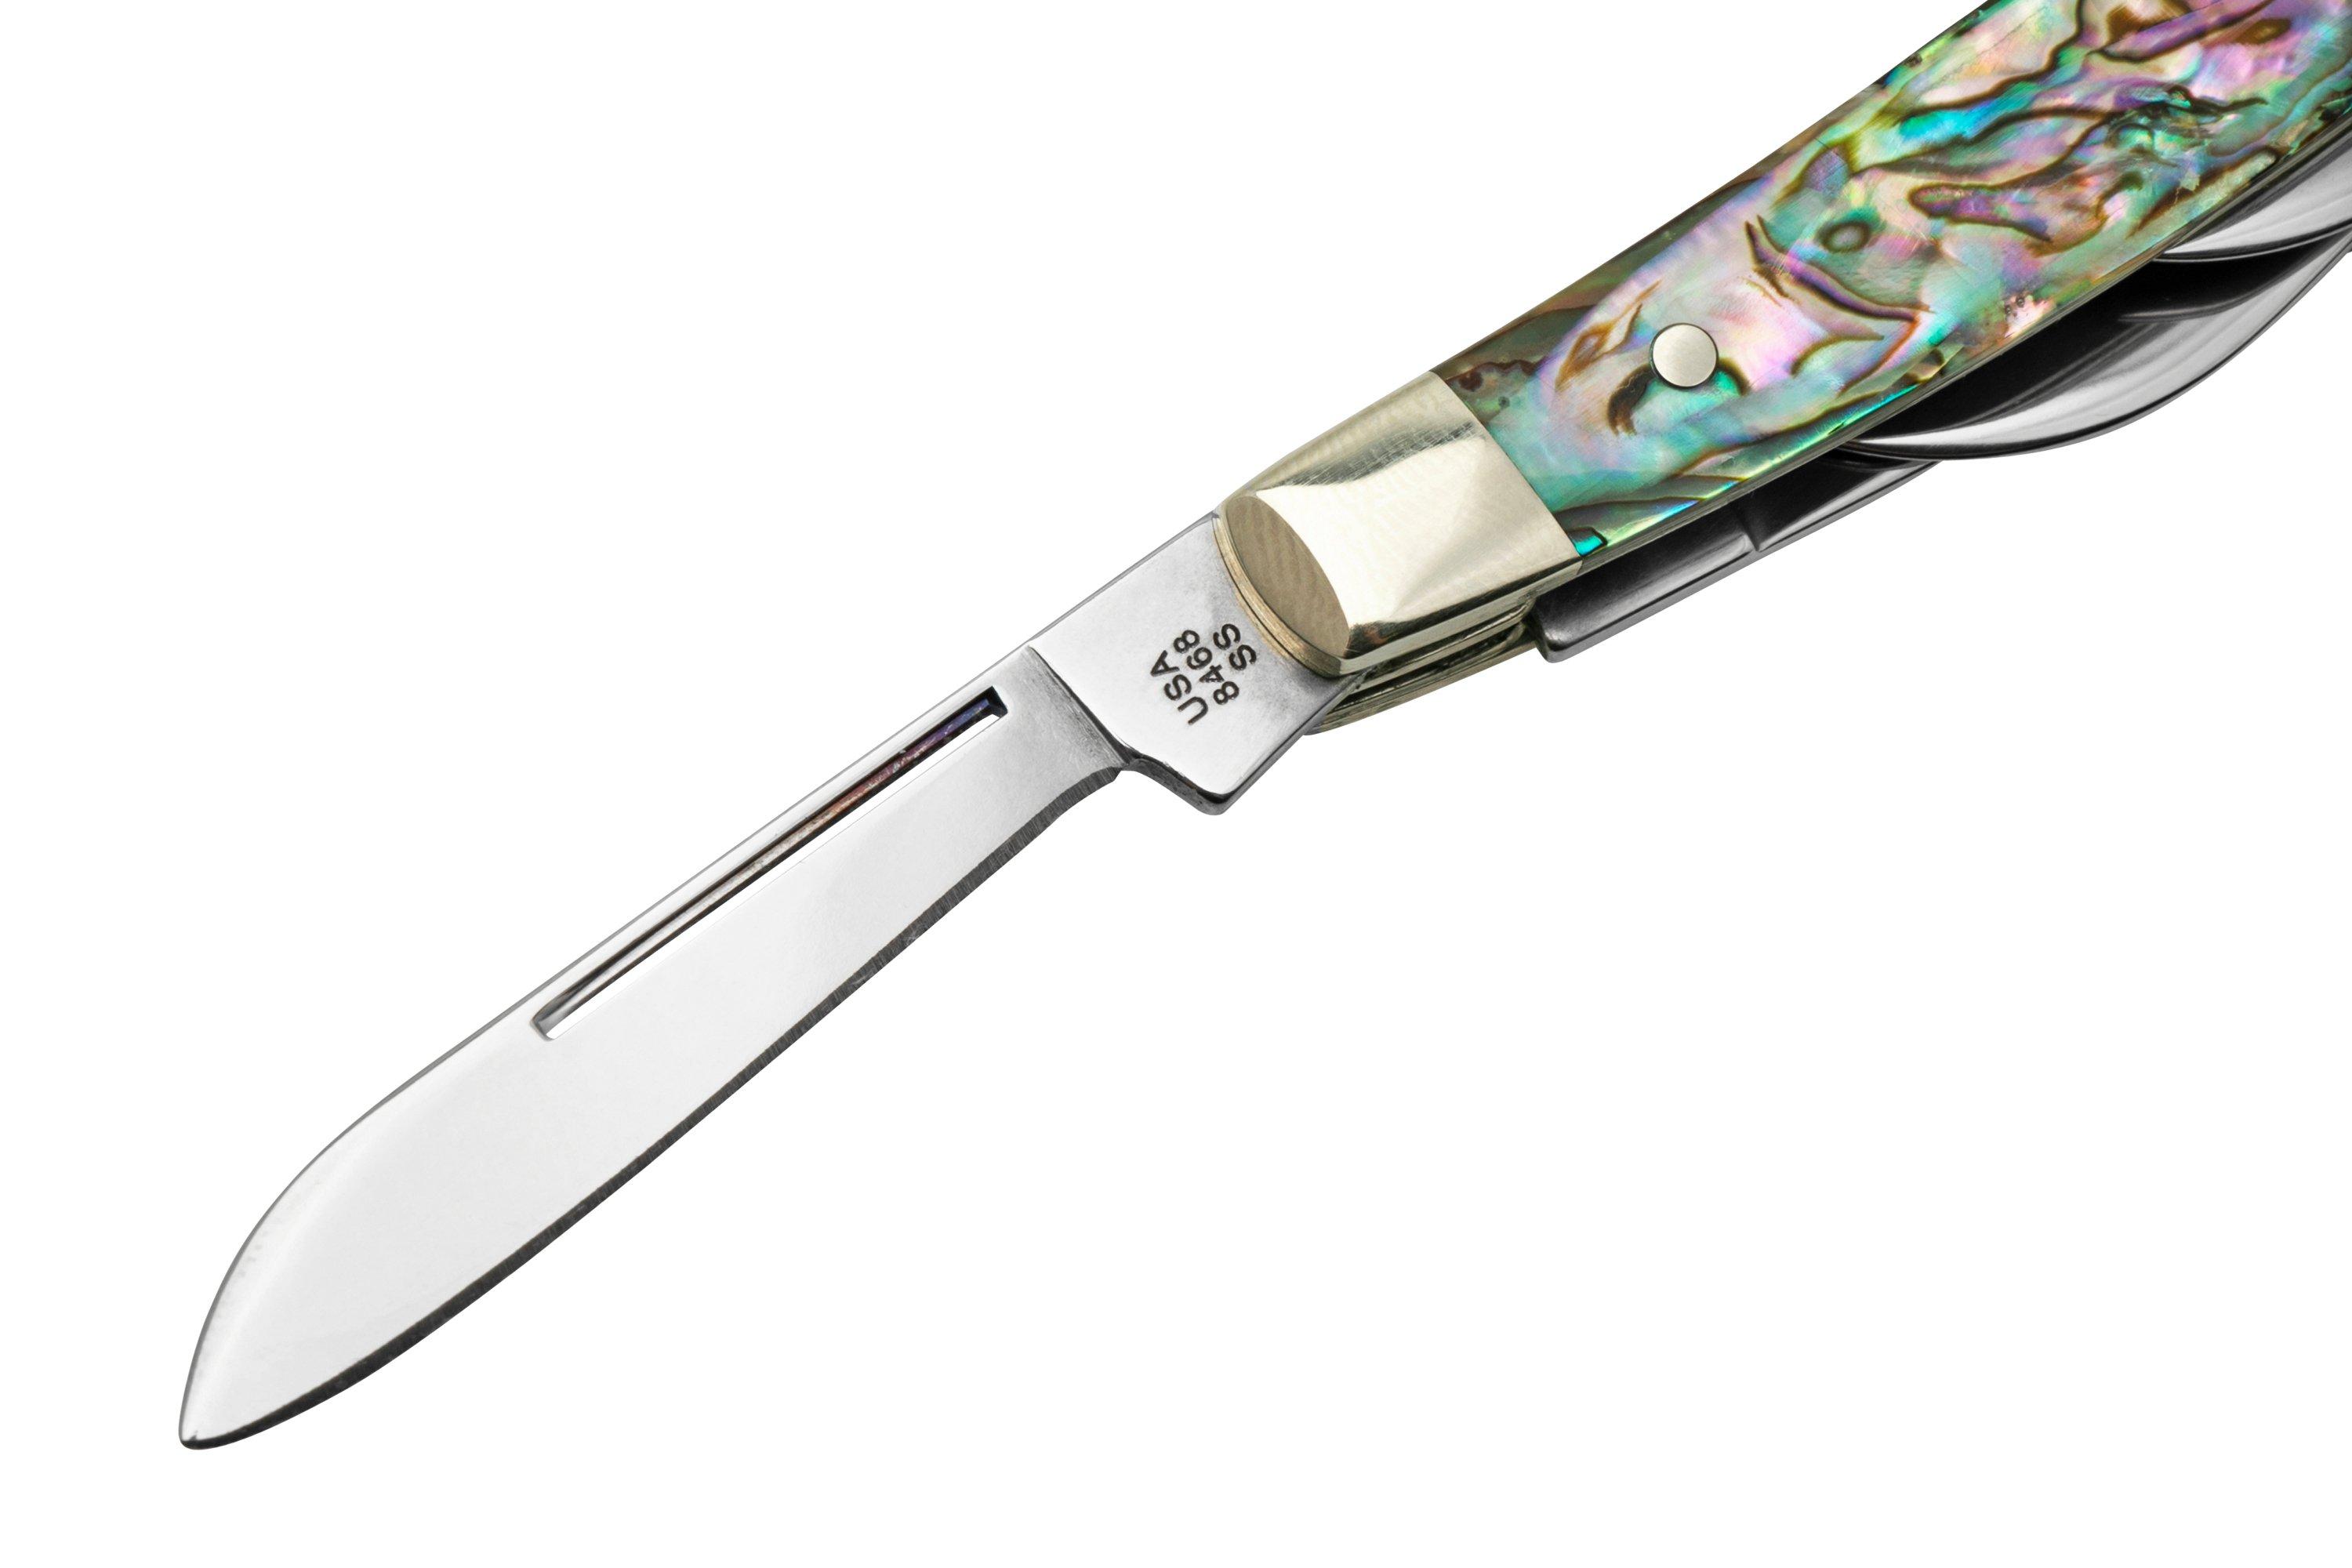 Case®  Household Cutlery 6 Boning Knife (Solid Walnut) –